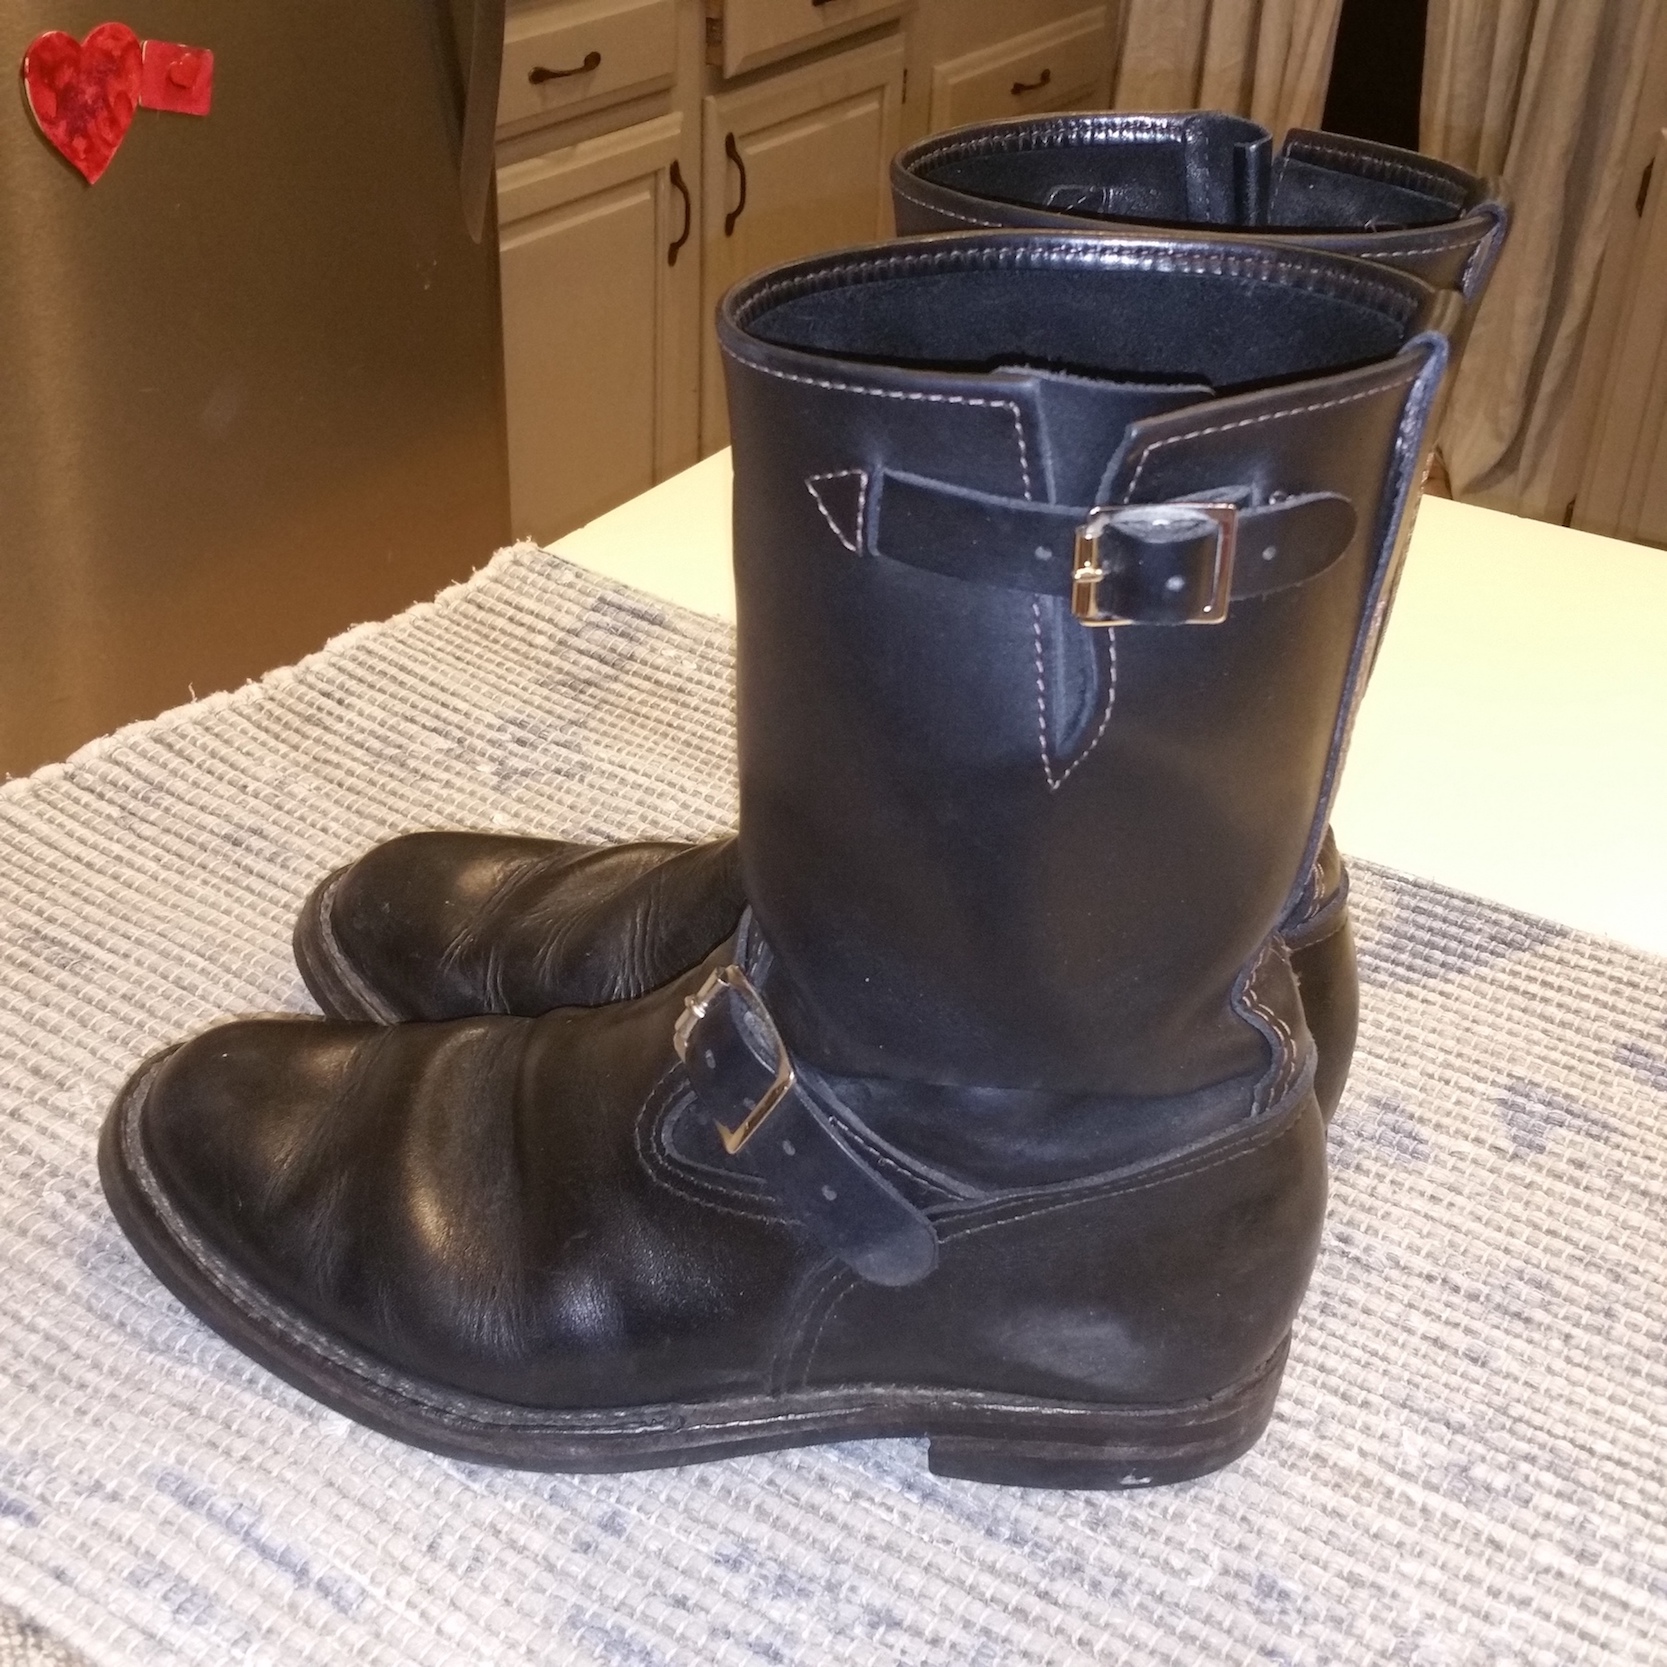 Wesco MP toe engineer boots size 11E $350 | The Fedora Lounge